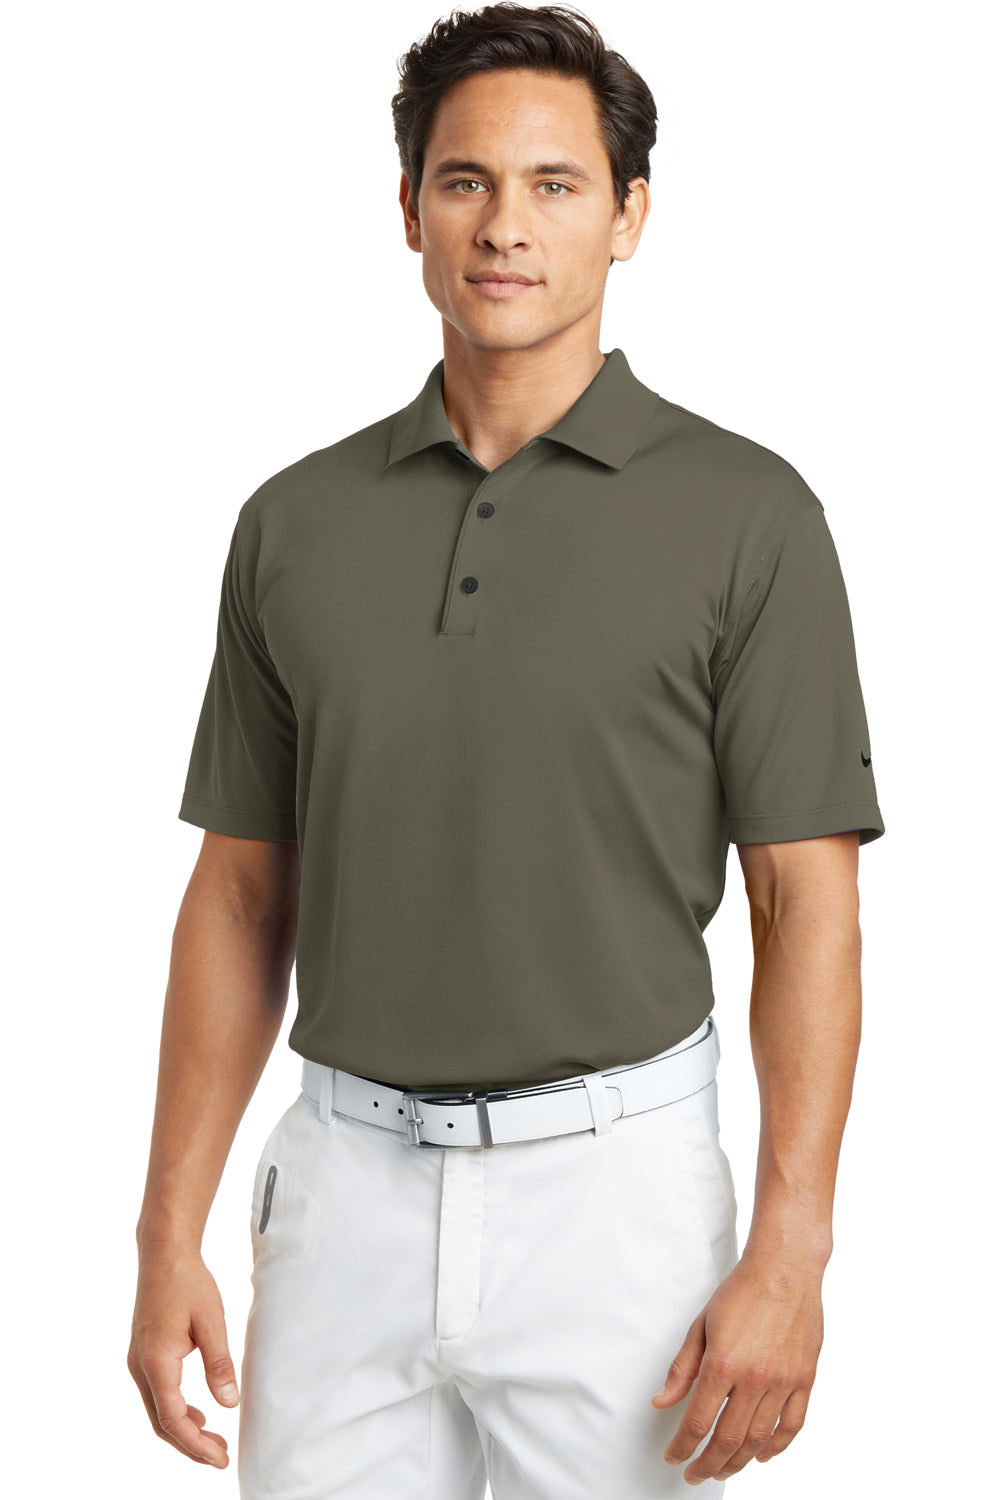 Nike 203690 Mens Tech Basic Dri-Fit Moisture Wicking Short Sleeve Polo Shirt Olive Khaki Model Front